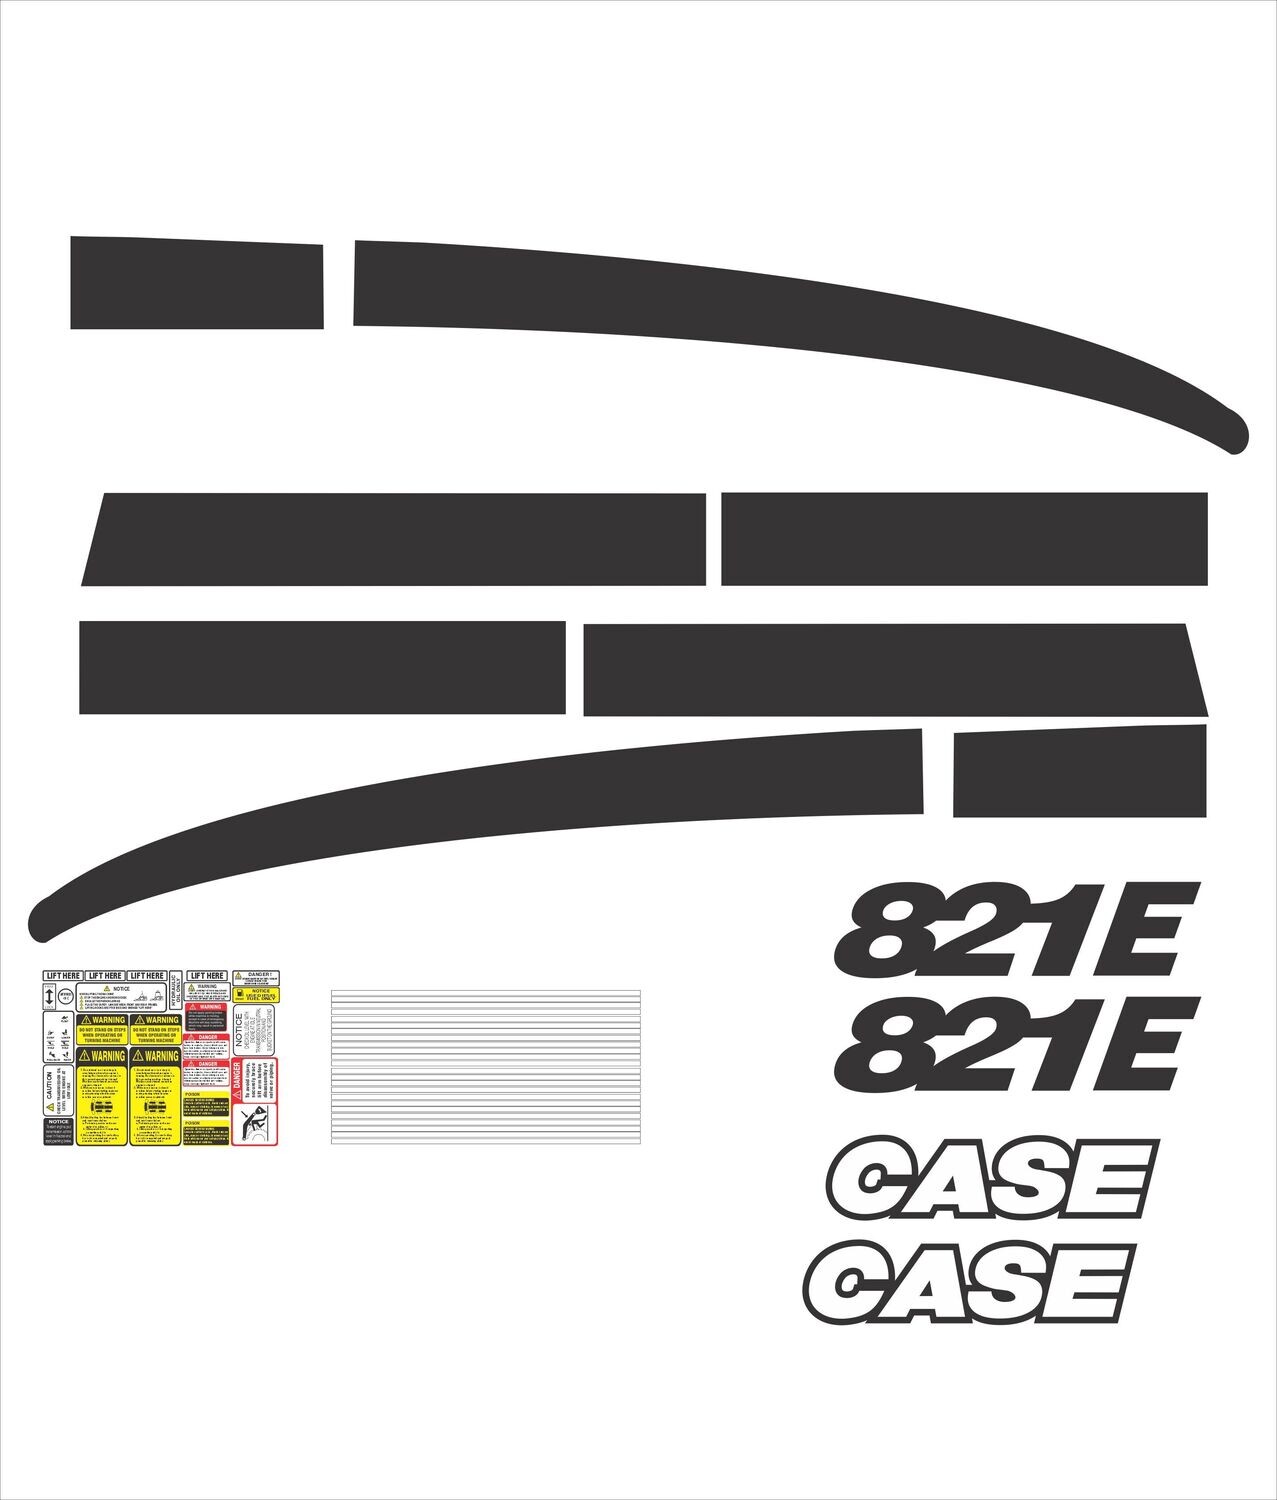 Case 821 E Wheel Loader